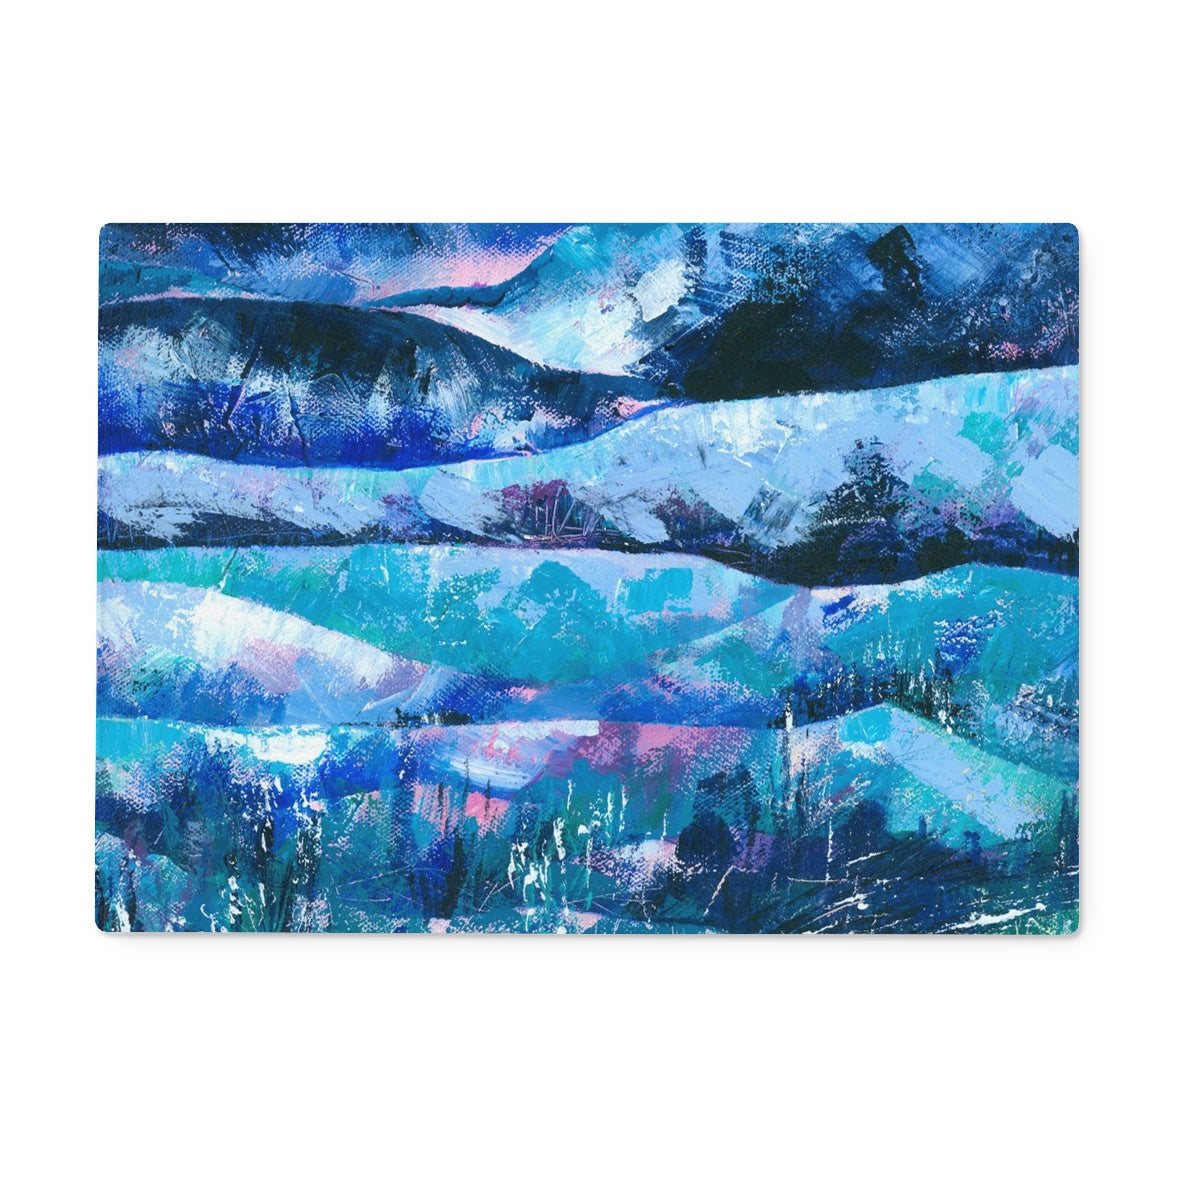 Rectangular glass chopping board featuring a blue and pink original abstract landscape art print.